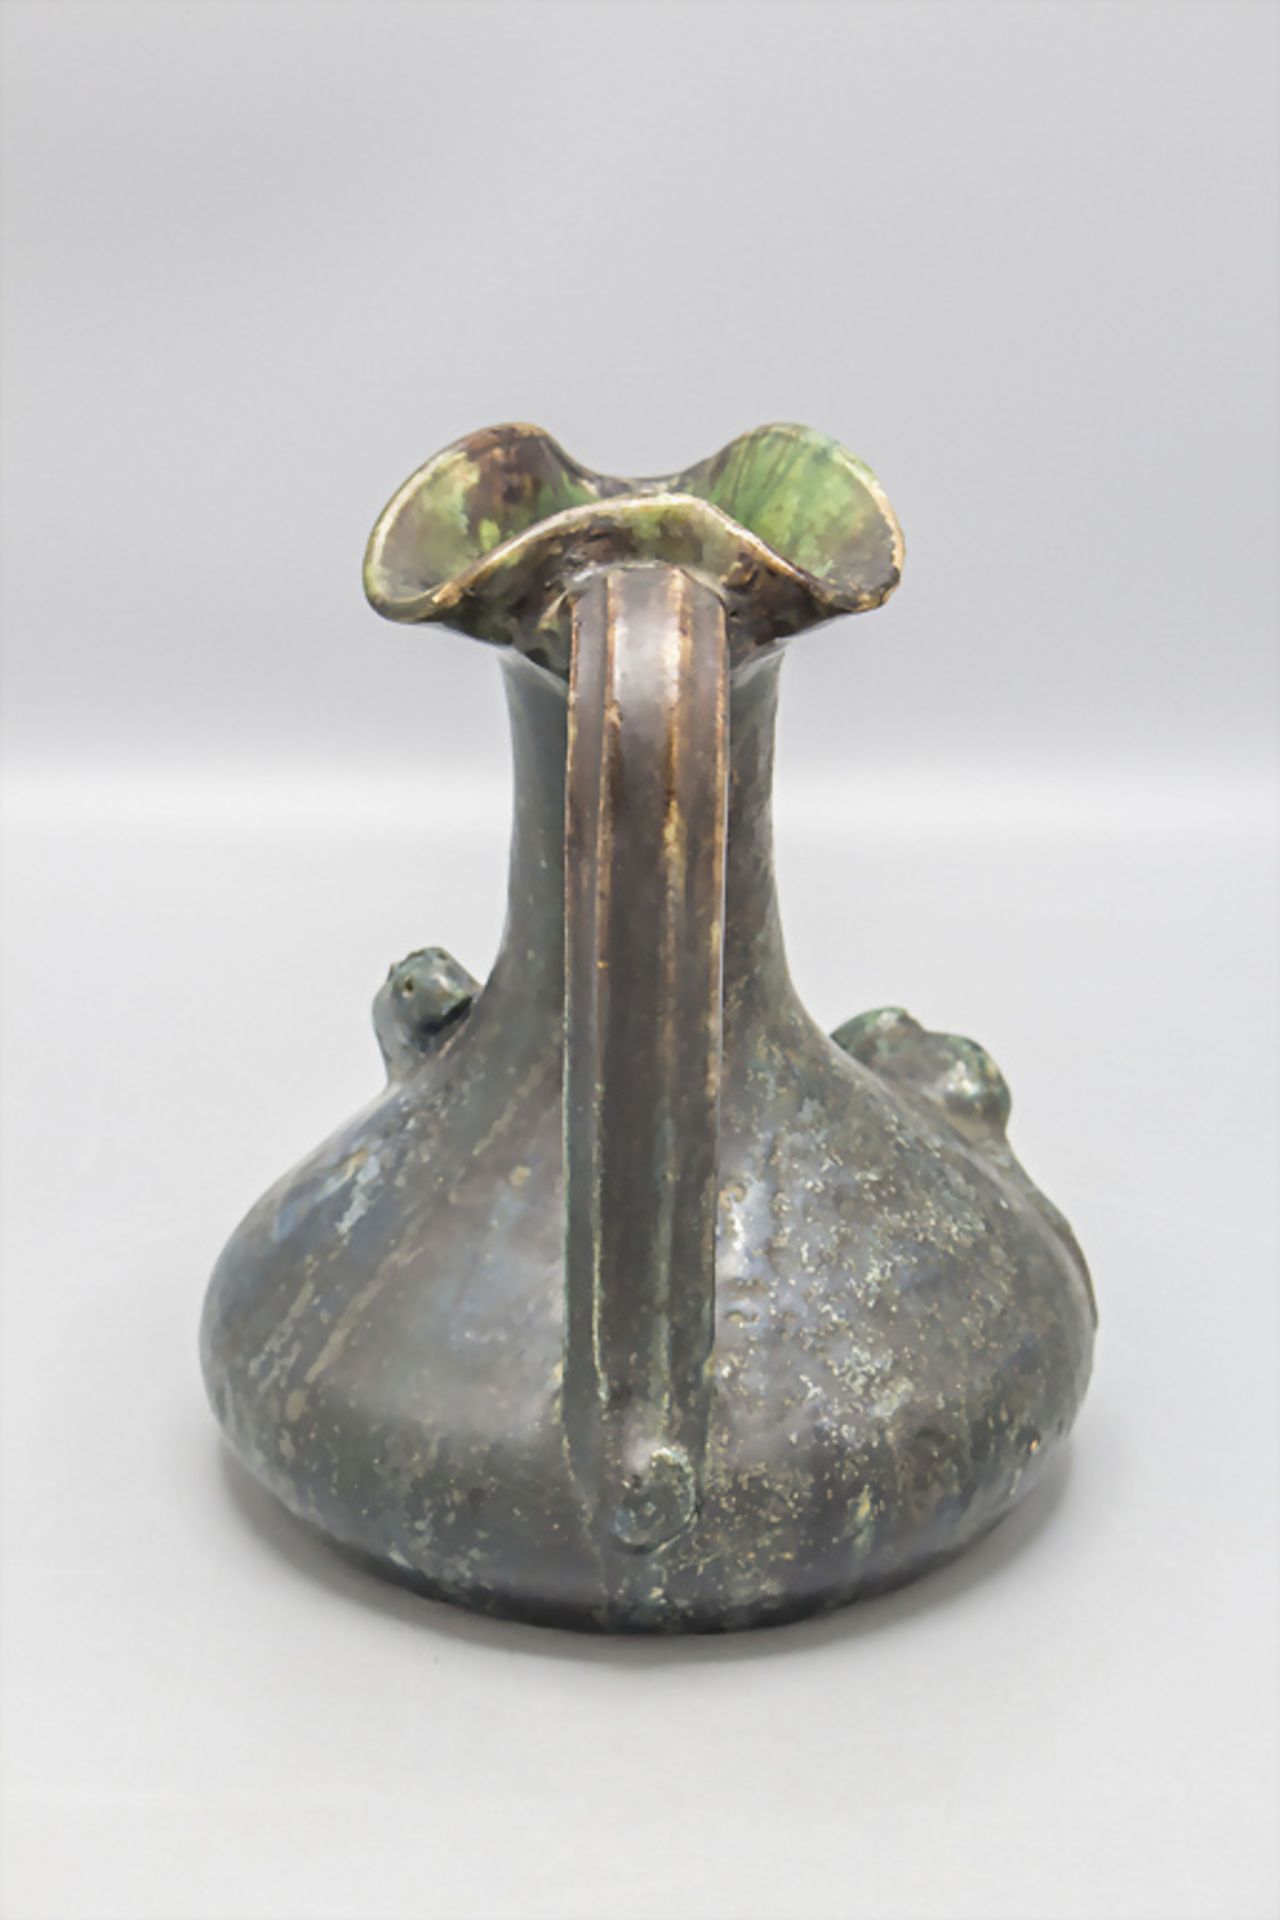 Keramik Henkelvase mit Mäusen / A ceramic handled vase with mice - Image 4 of 7